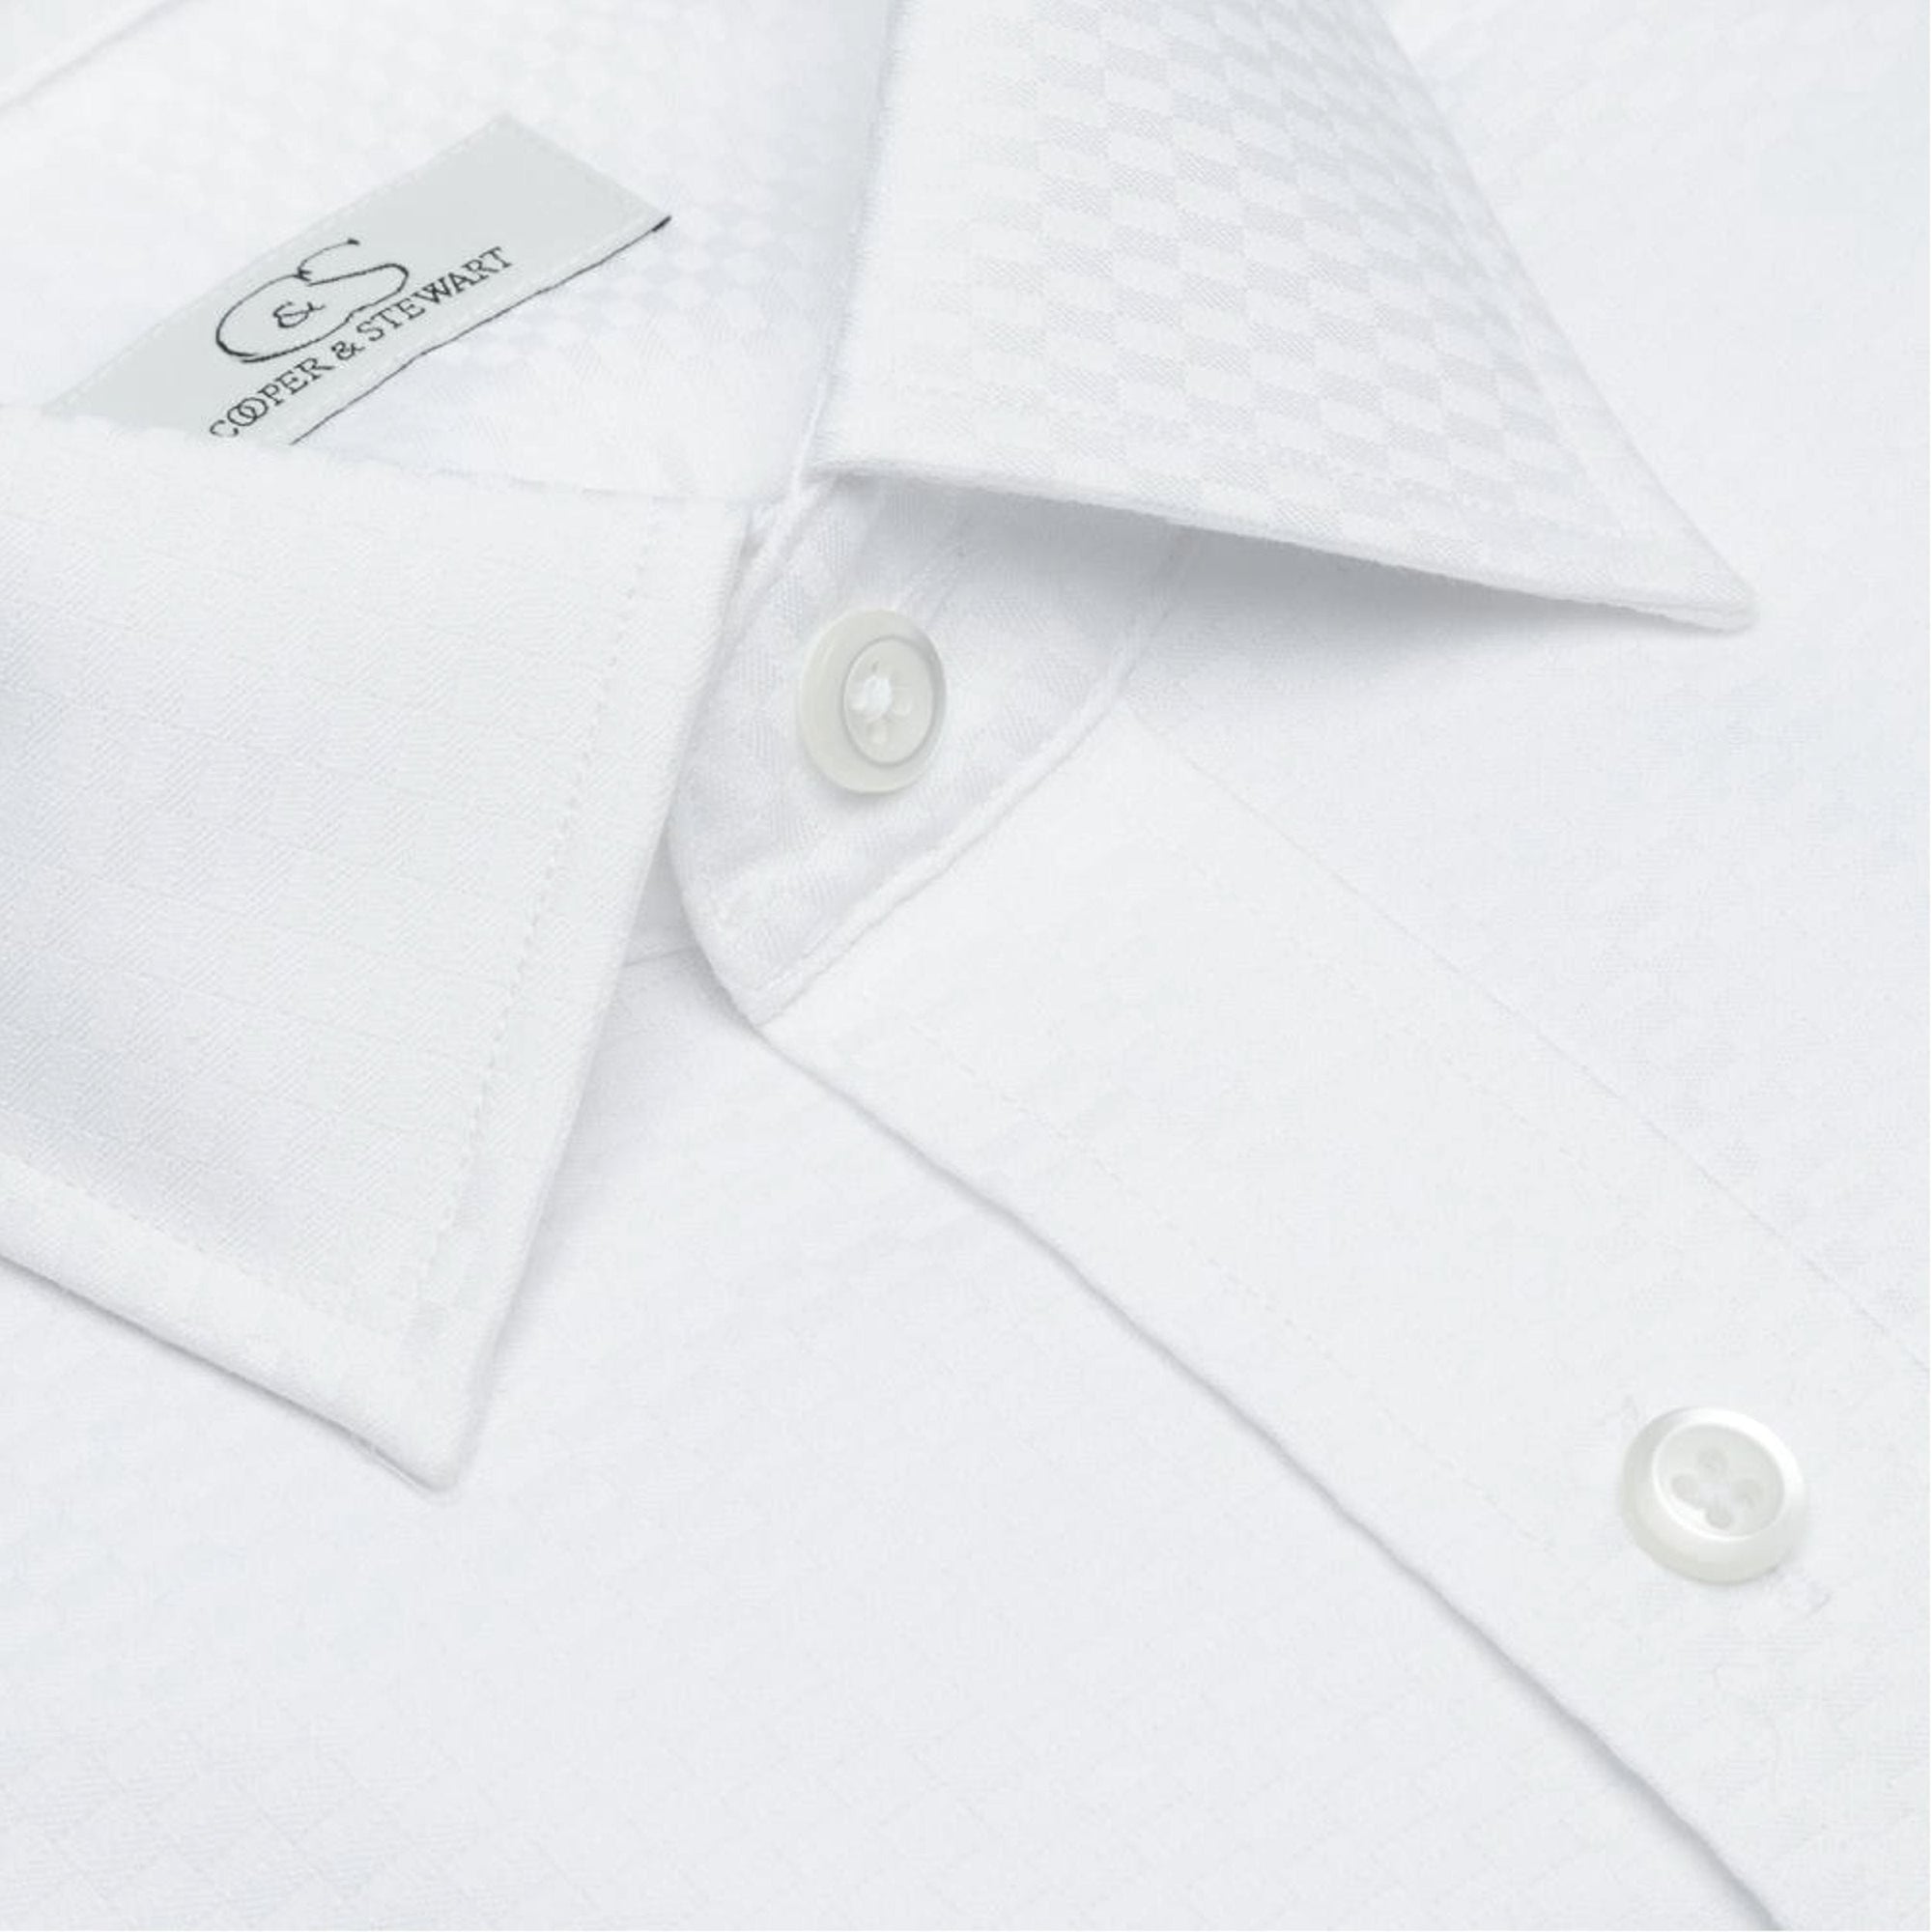 The Washington - Wrinkle-Free Tonal Check Cotton Dress Shirt in White (Size 15 1/2 - 34/35) by Cooper & Stewart